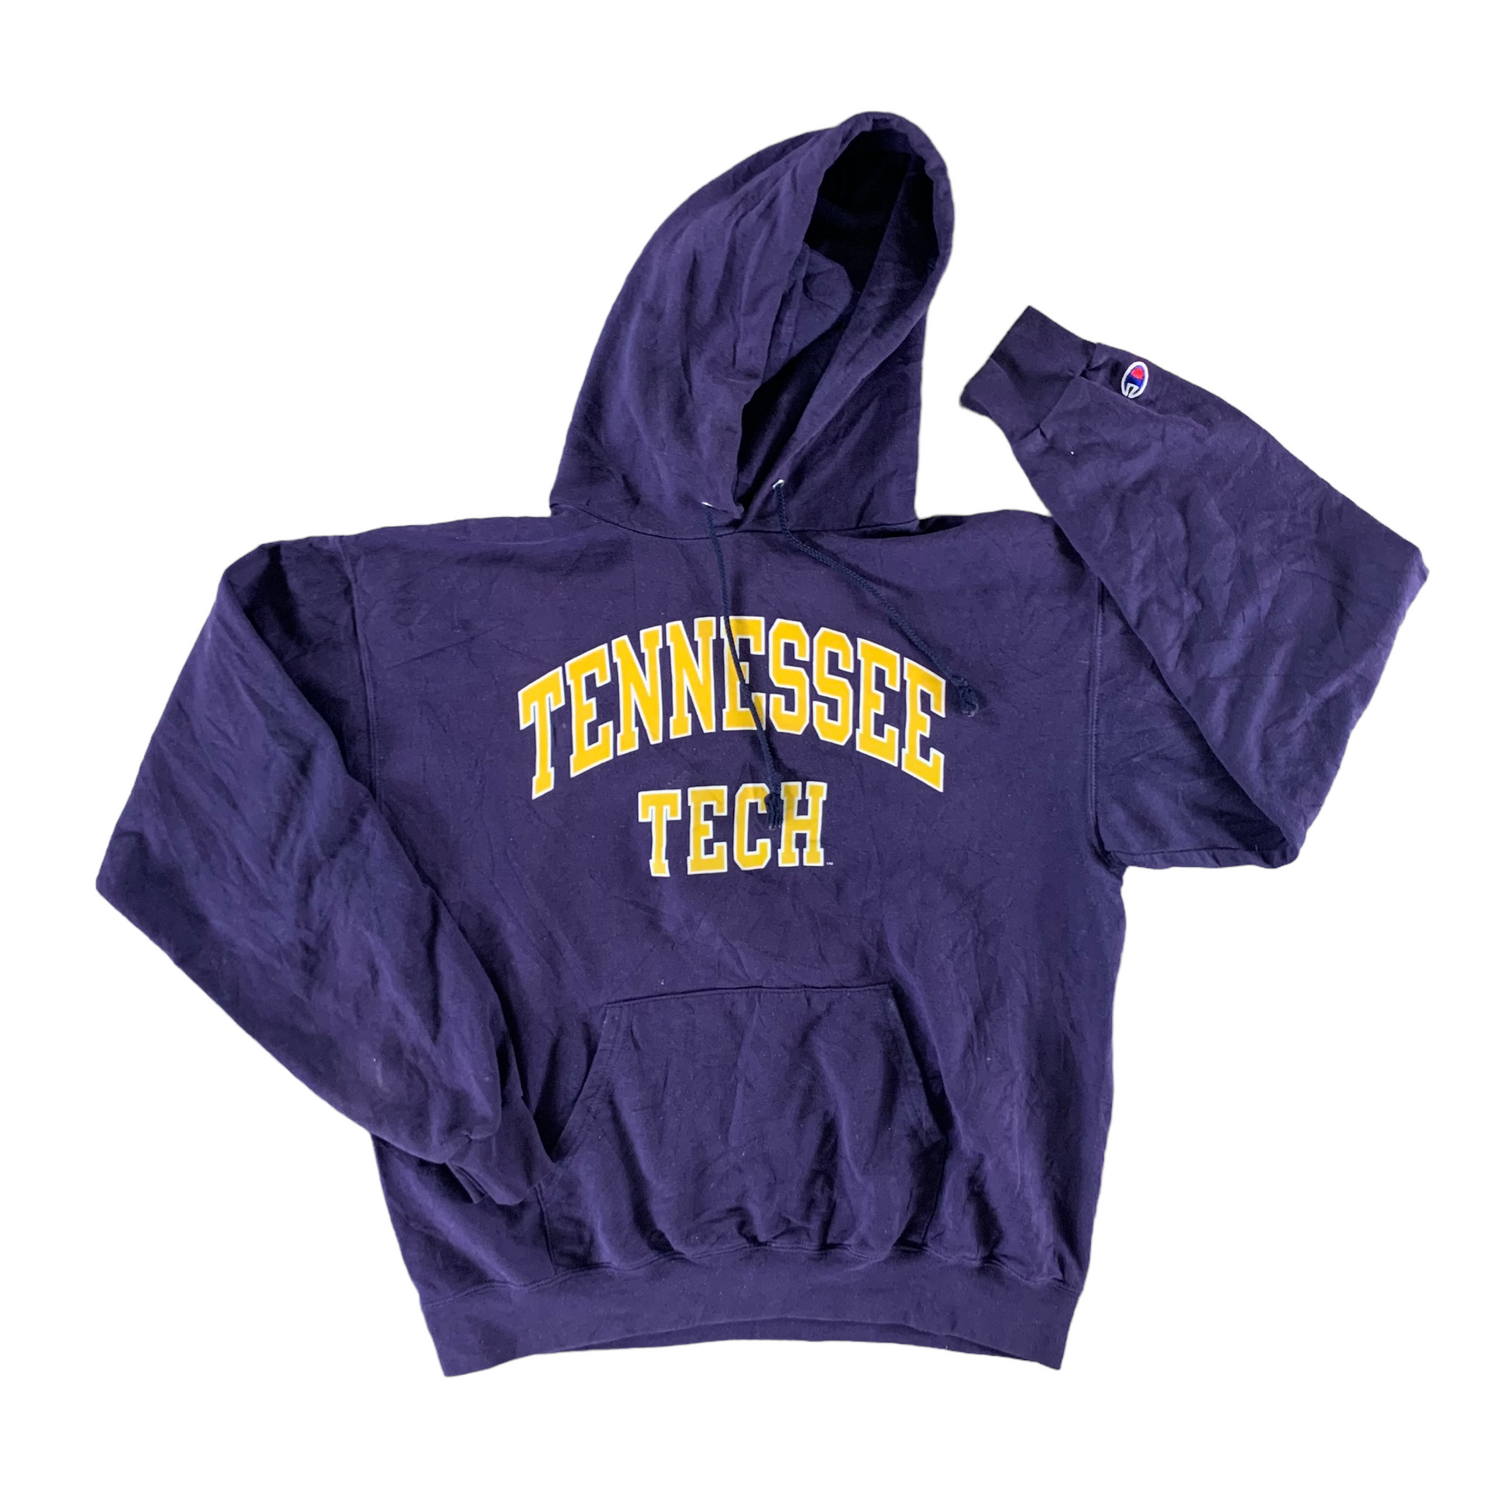 Vintage 1990s Tennessee Tech University Sweatshirt size Medium